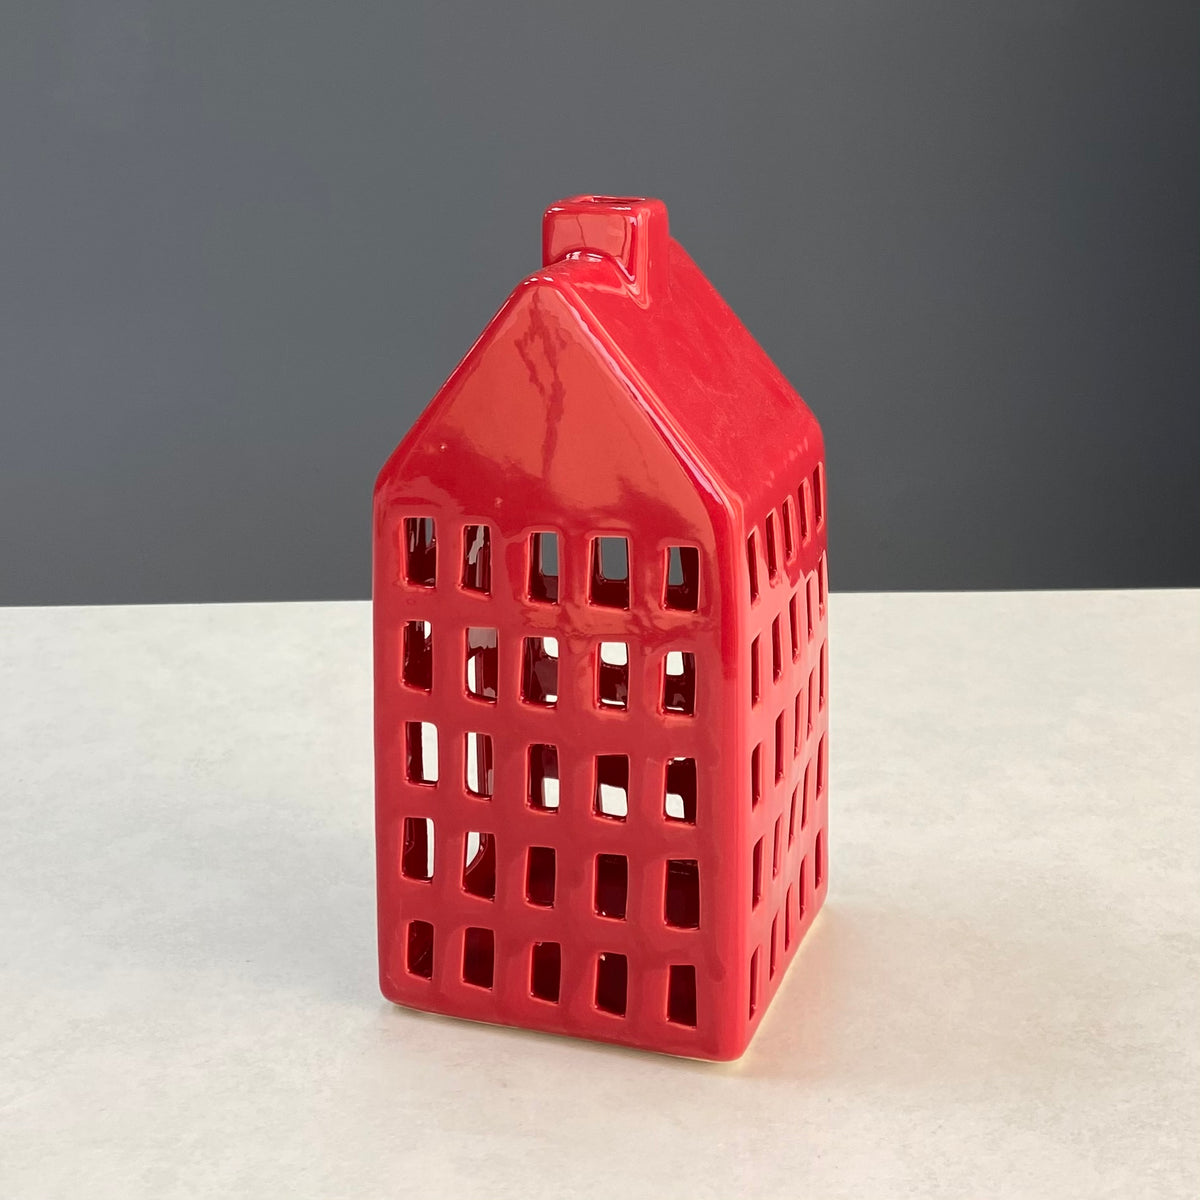 Little Red Ceramic House